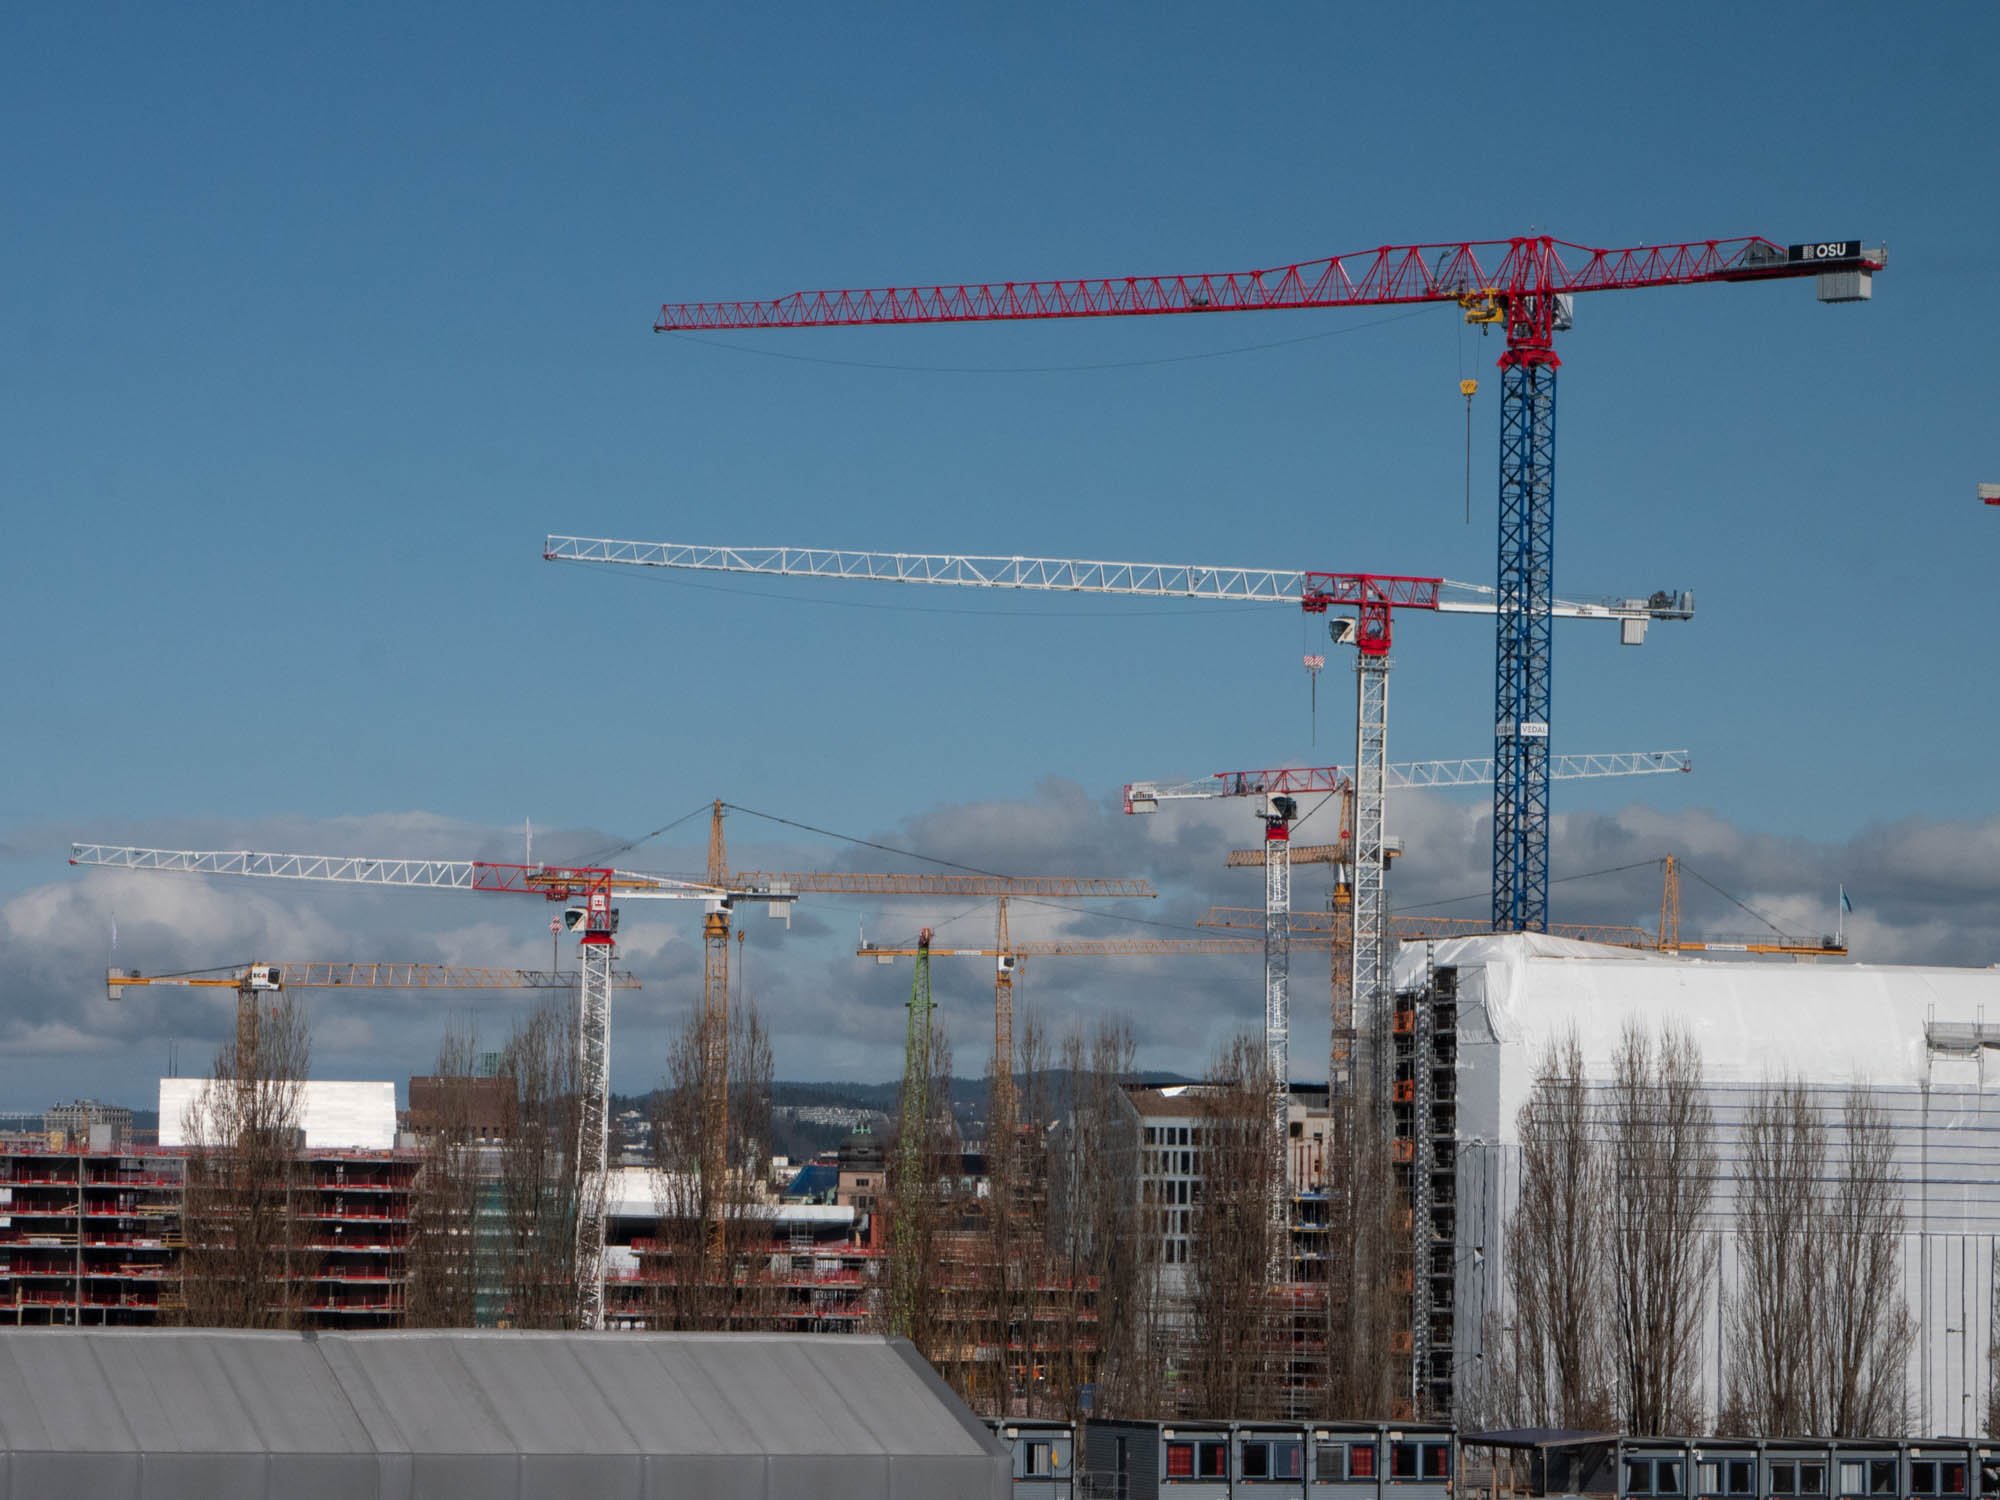 Oslo skyline with numerous cranes.